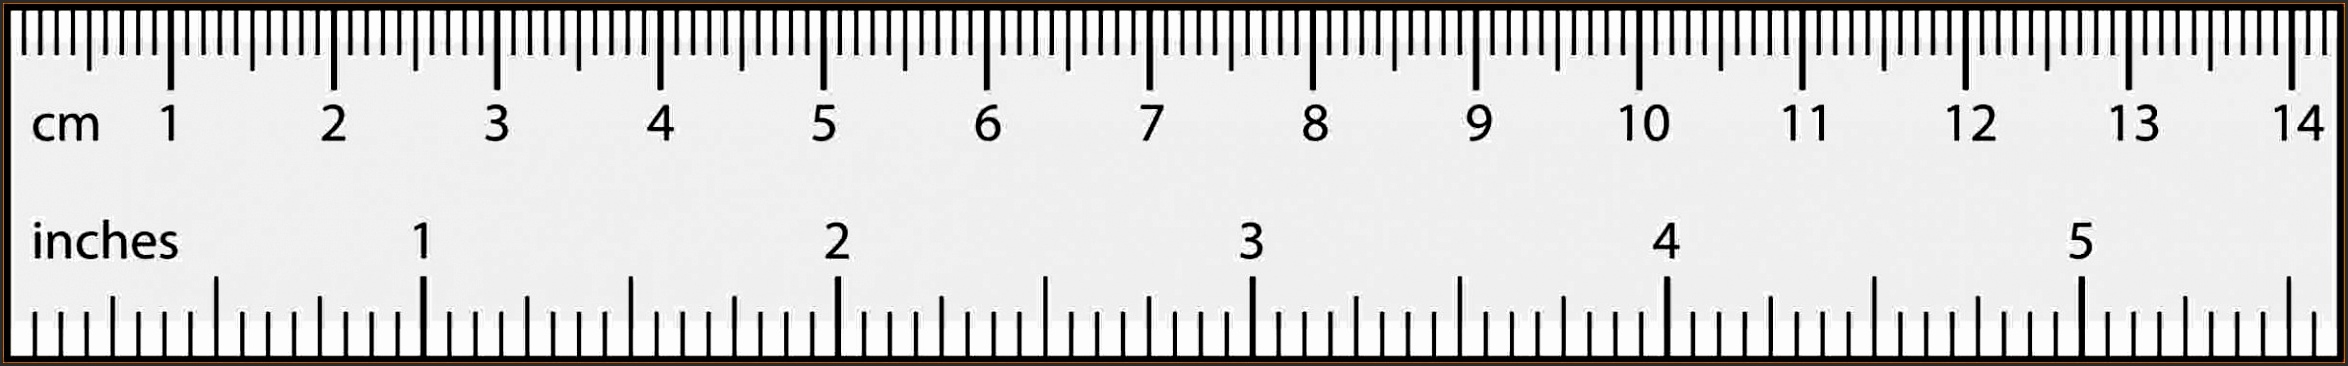 Top Ruler Actual Size Printable | Gary Website